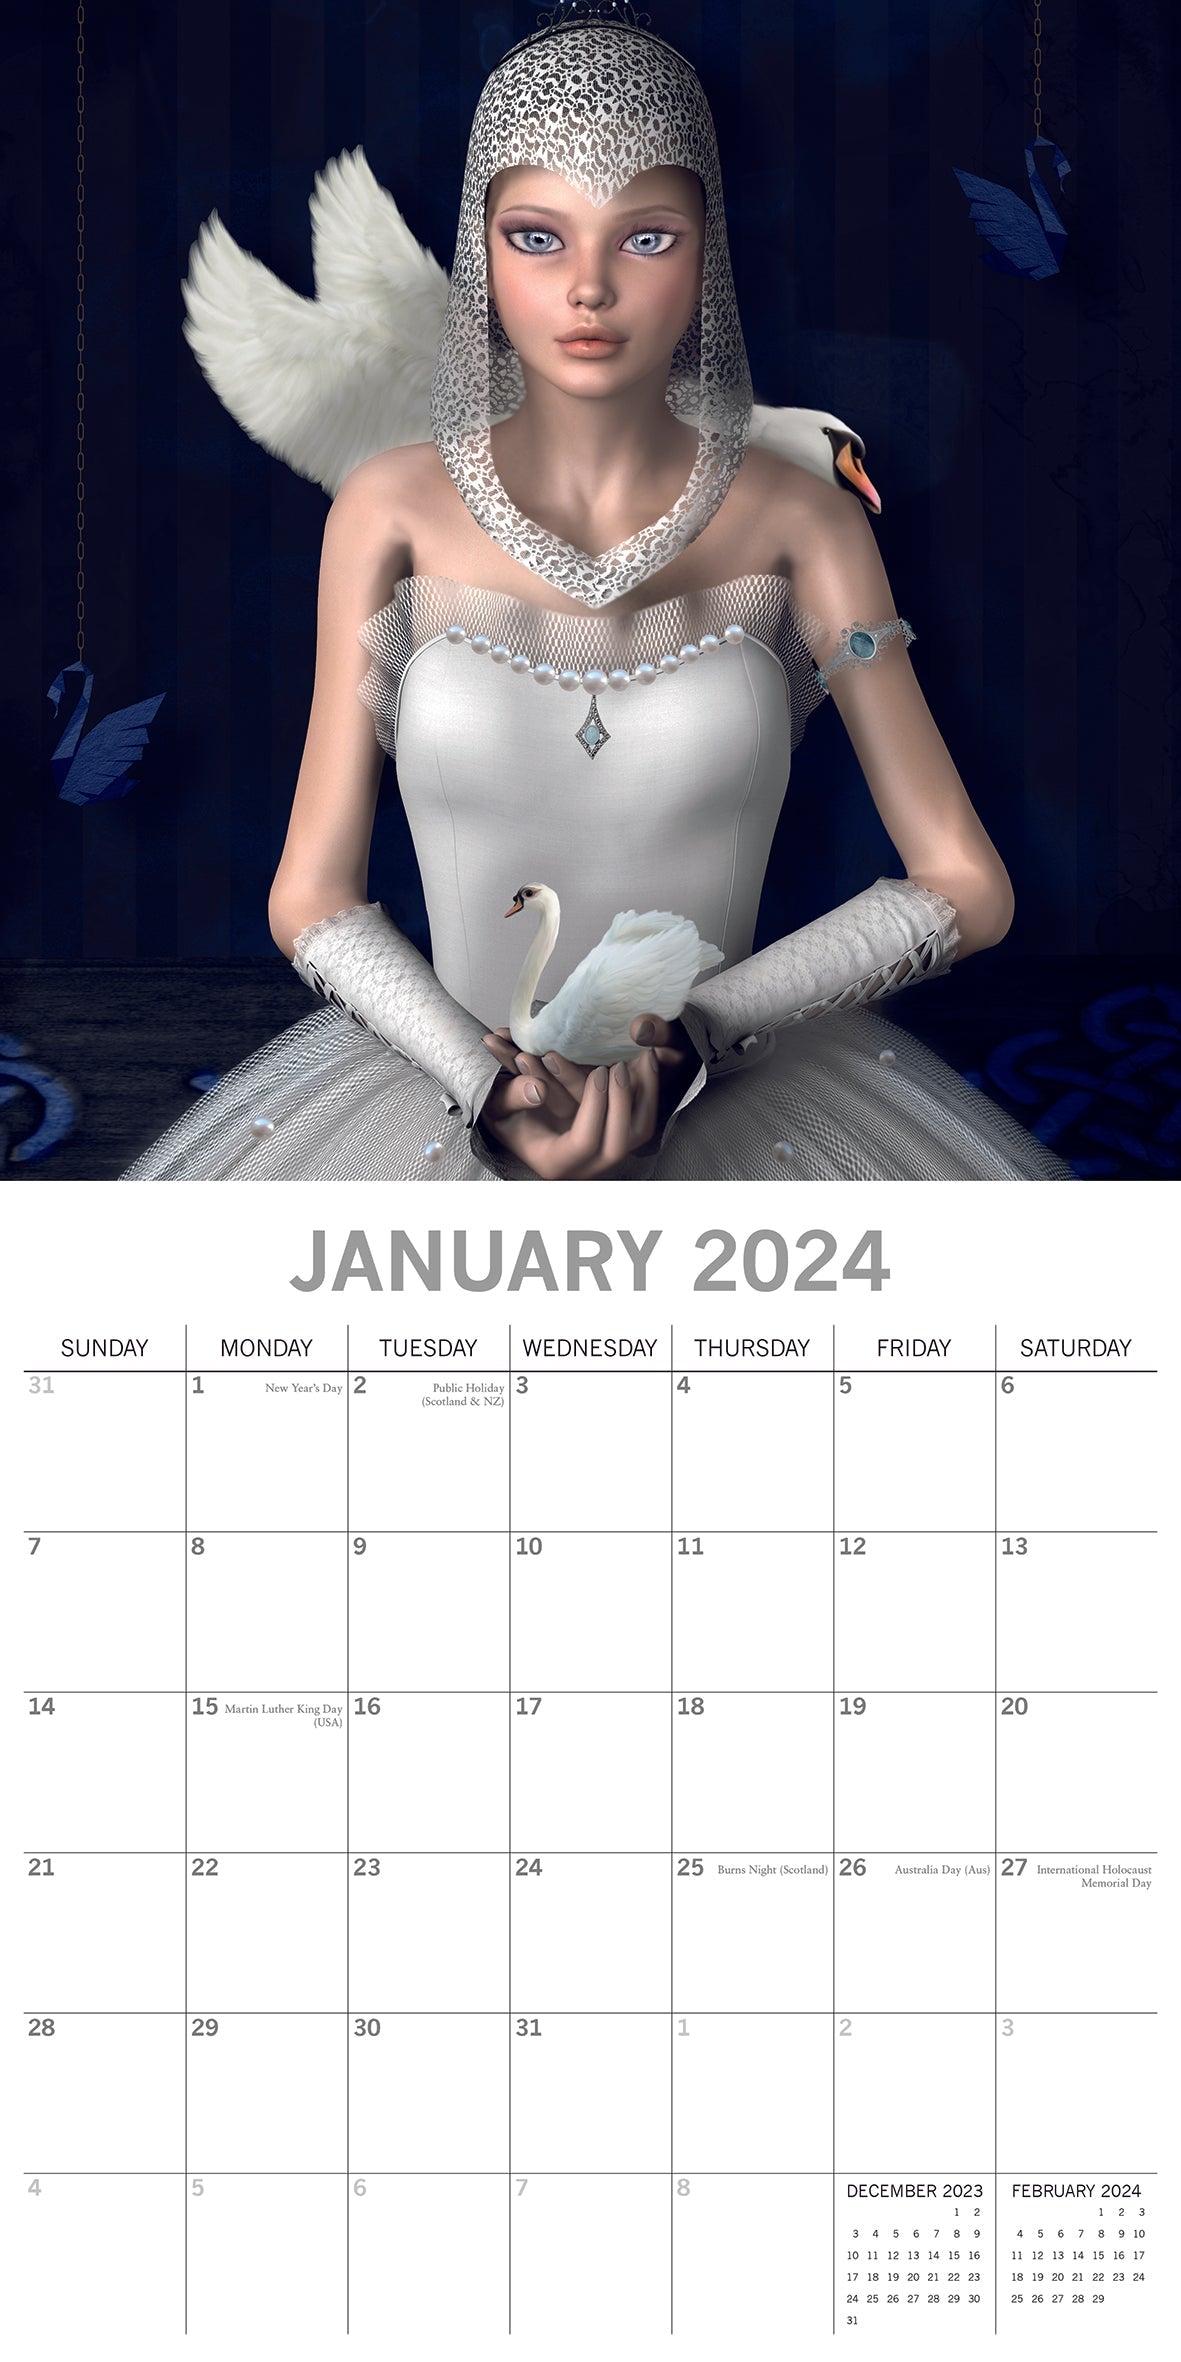 2024 Fantasy Art - Square Wall Calendar